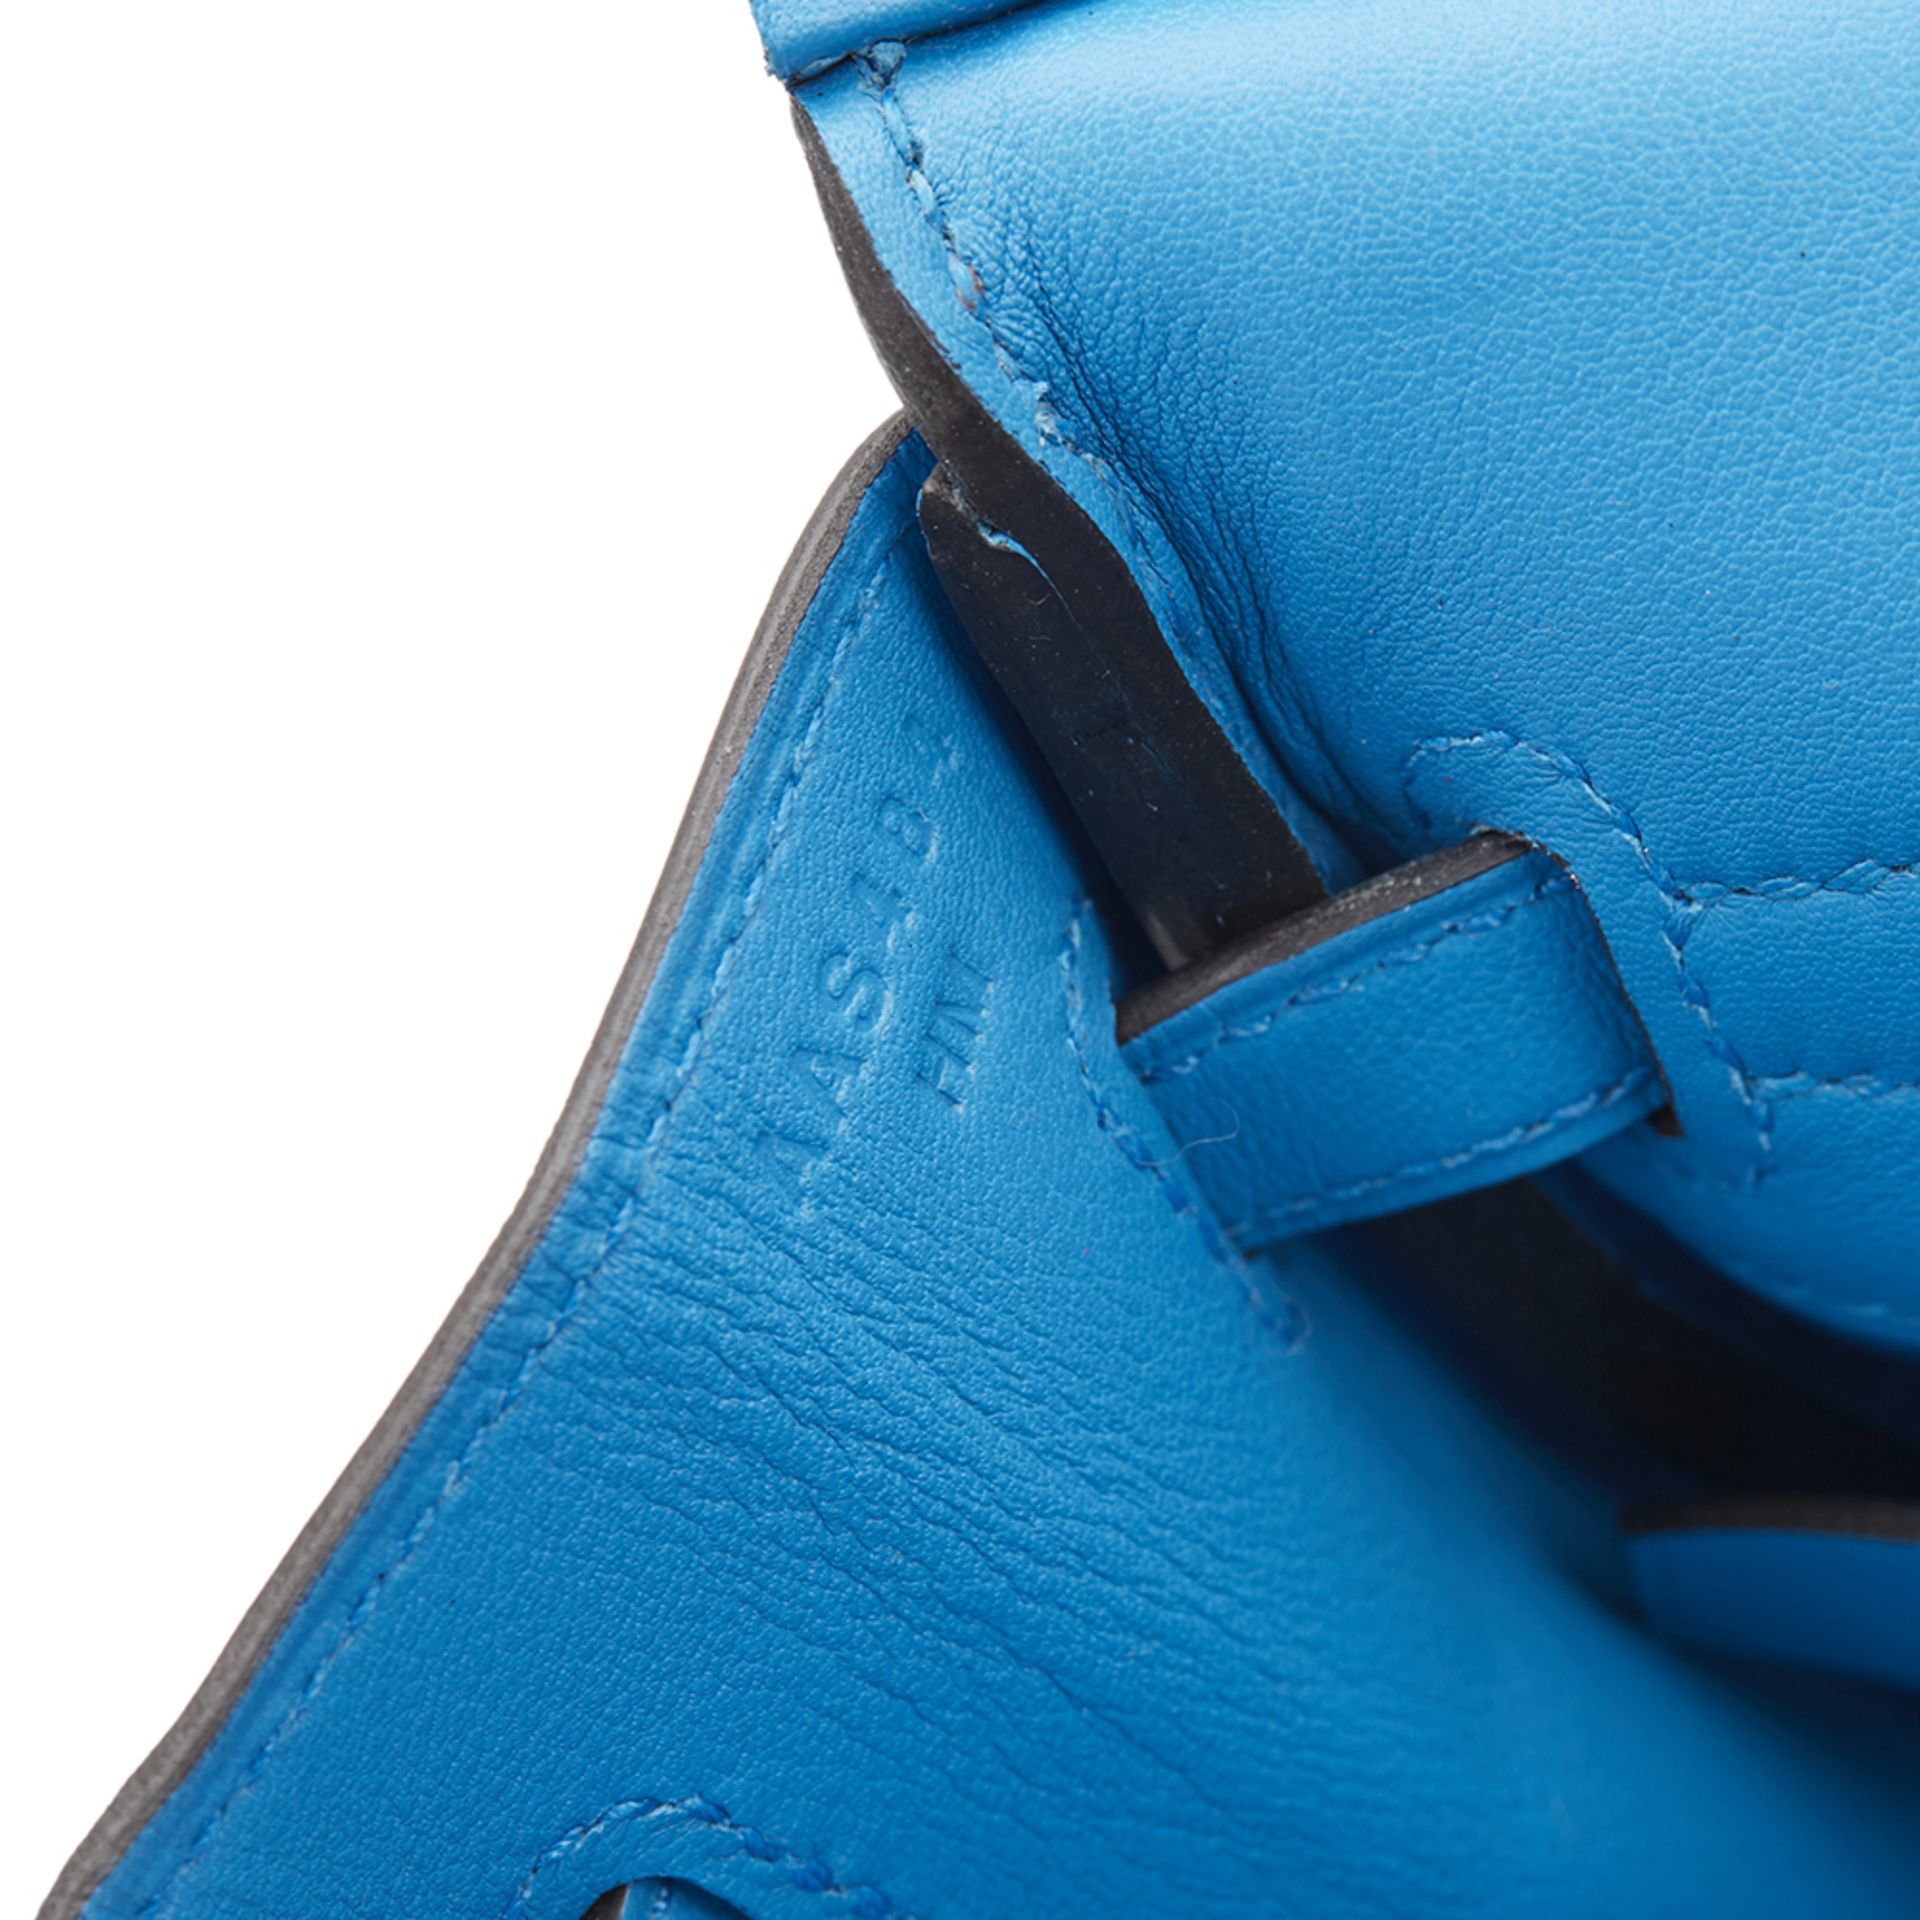 Blue Zanzibar Swift Leather Birkin 25cm - Image 7 of 10